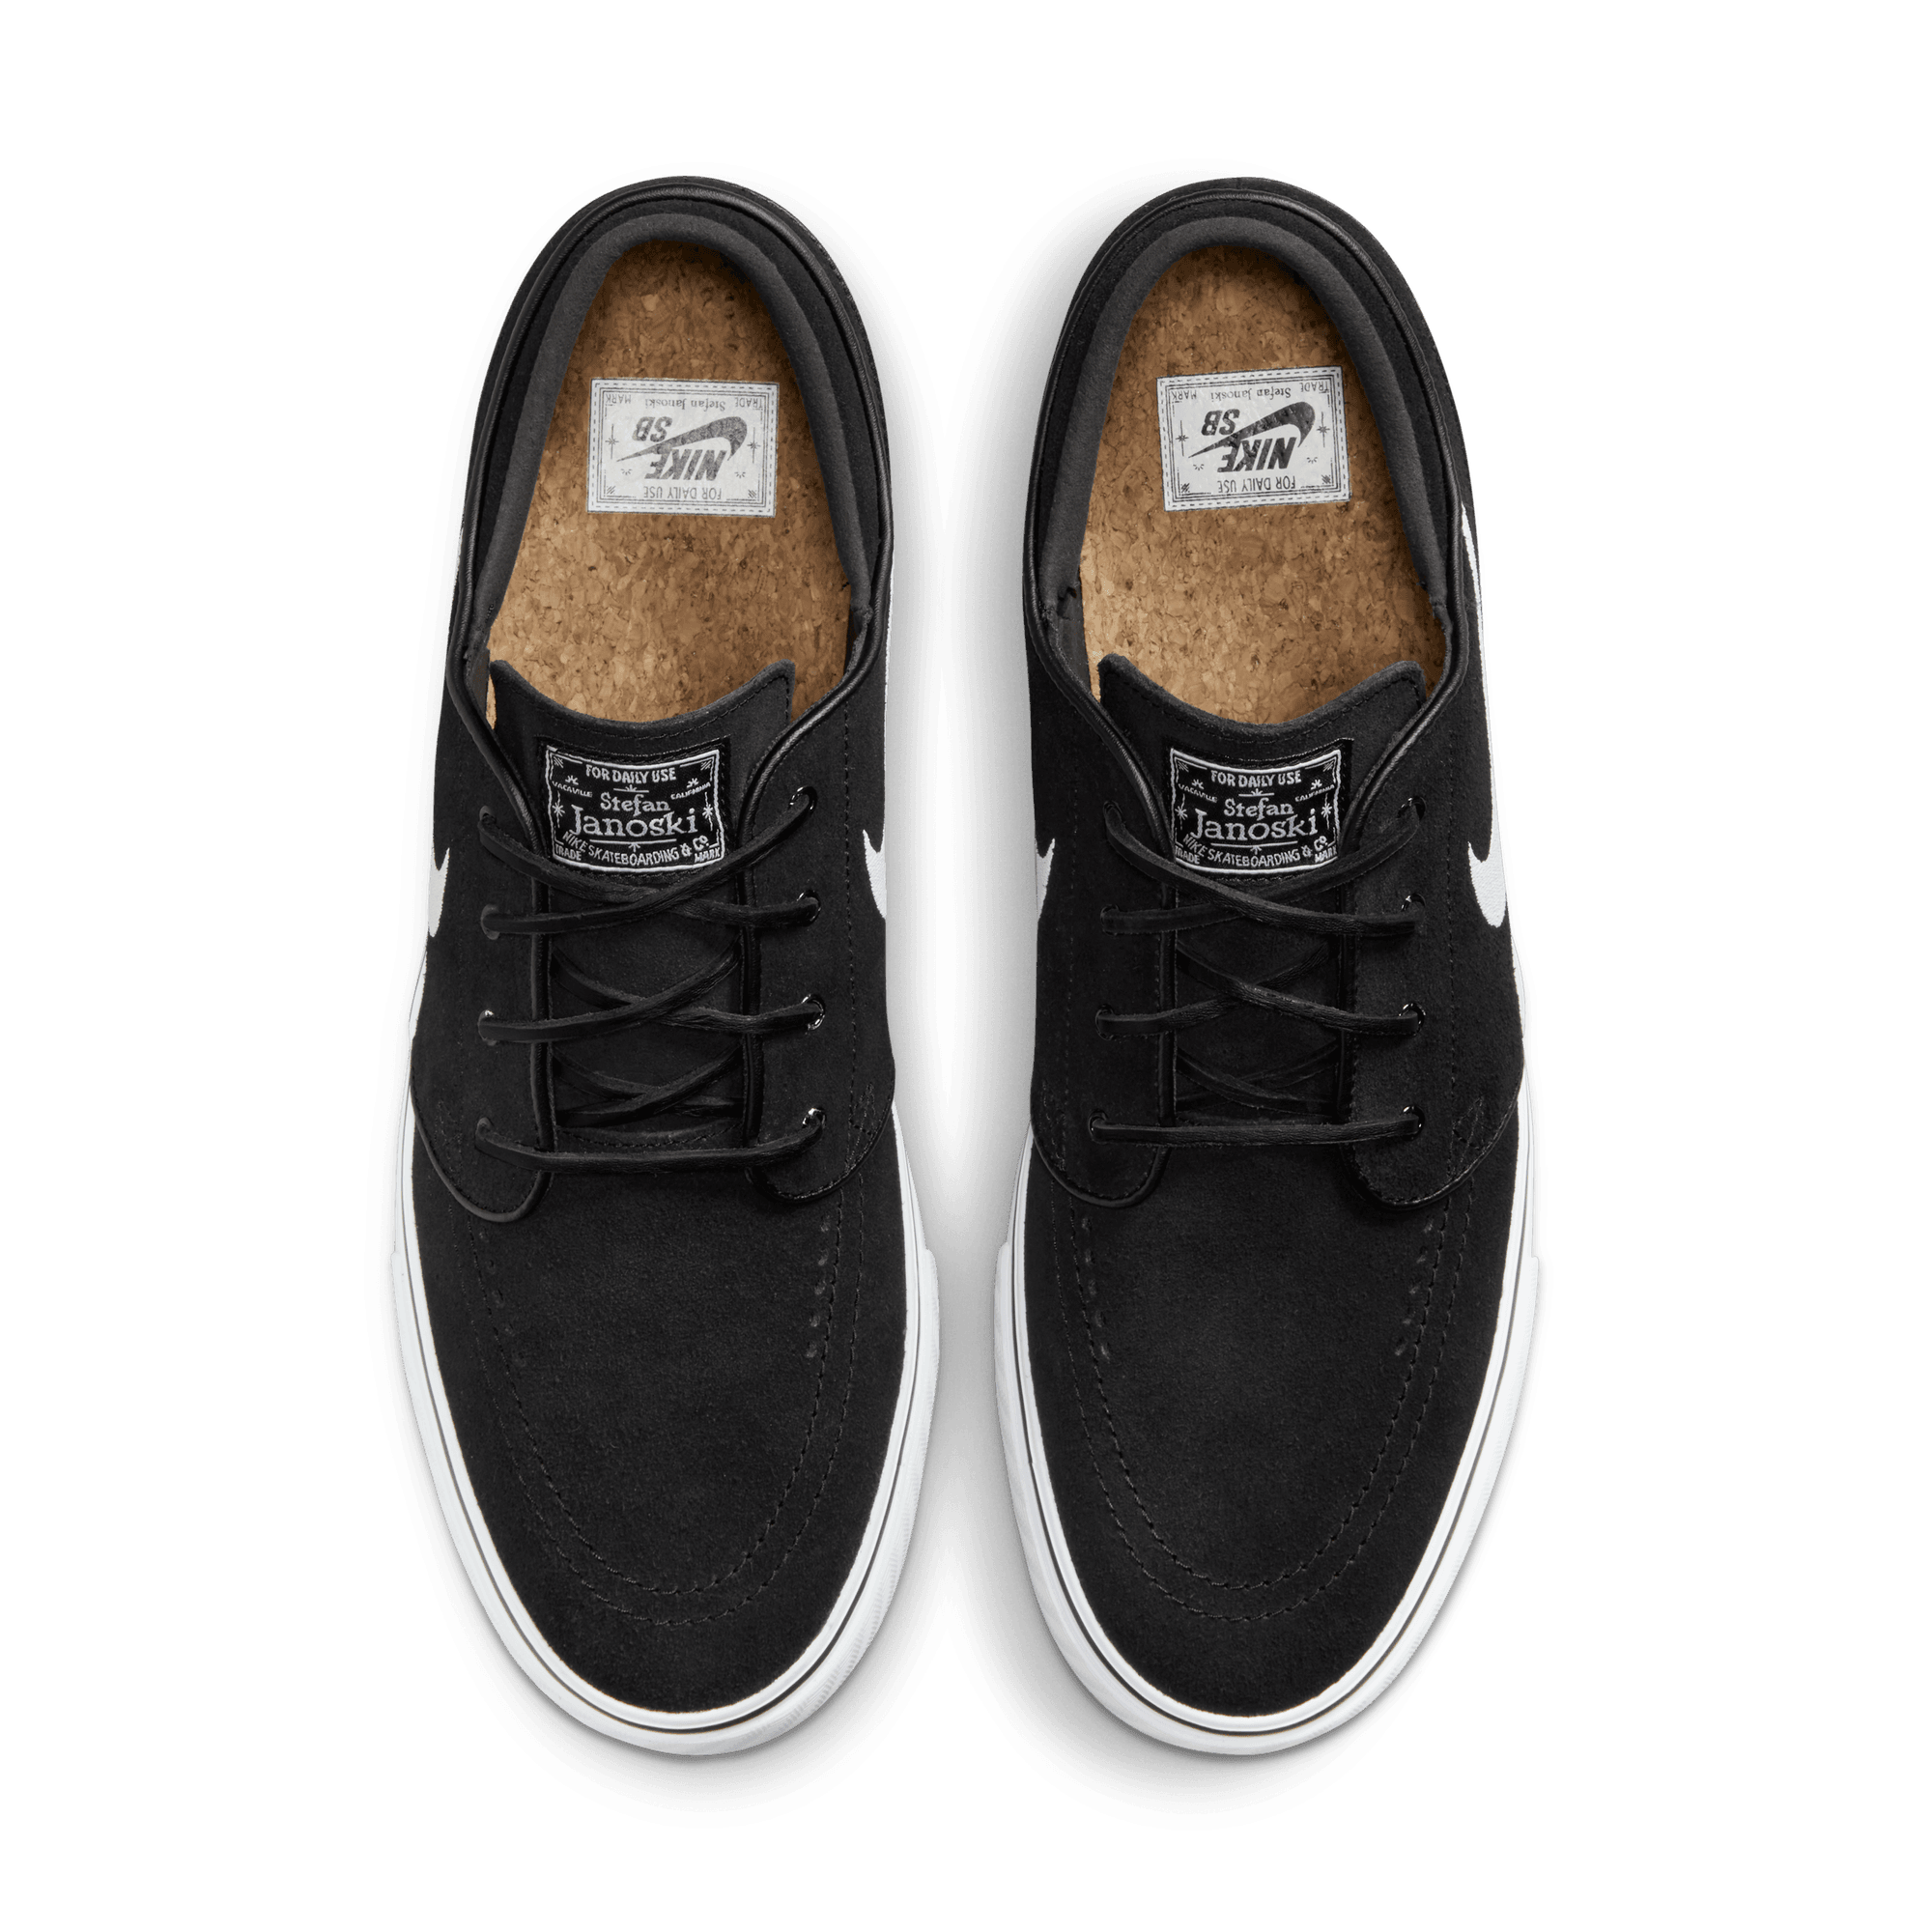 Black/White Janoski OG+ Nike SB Skate Shoe Top